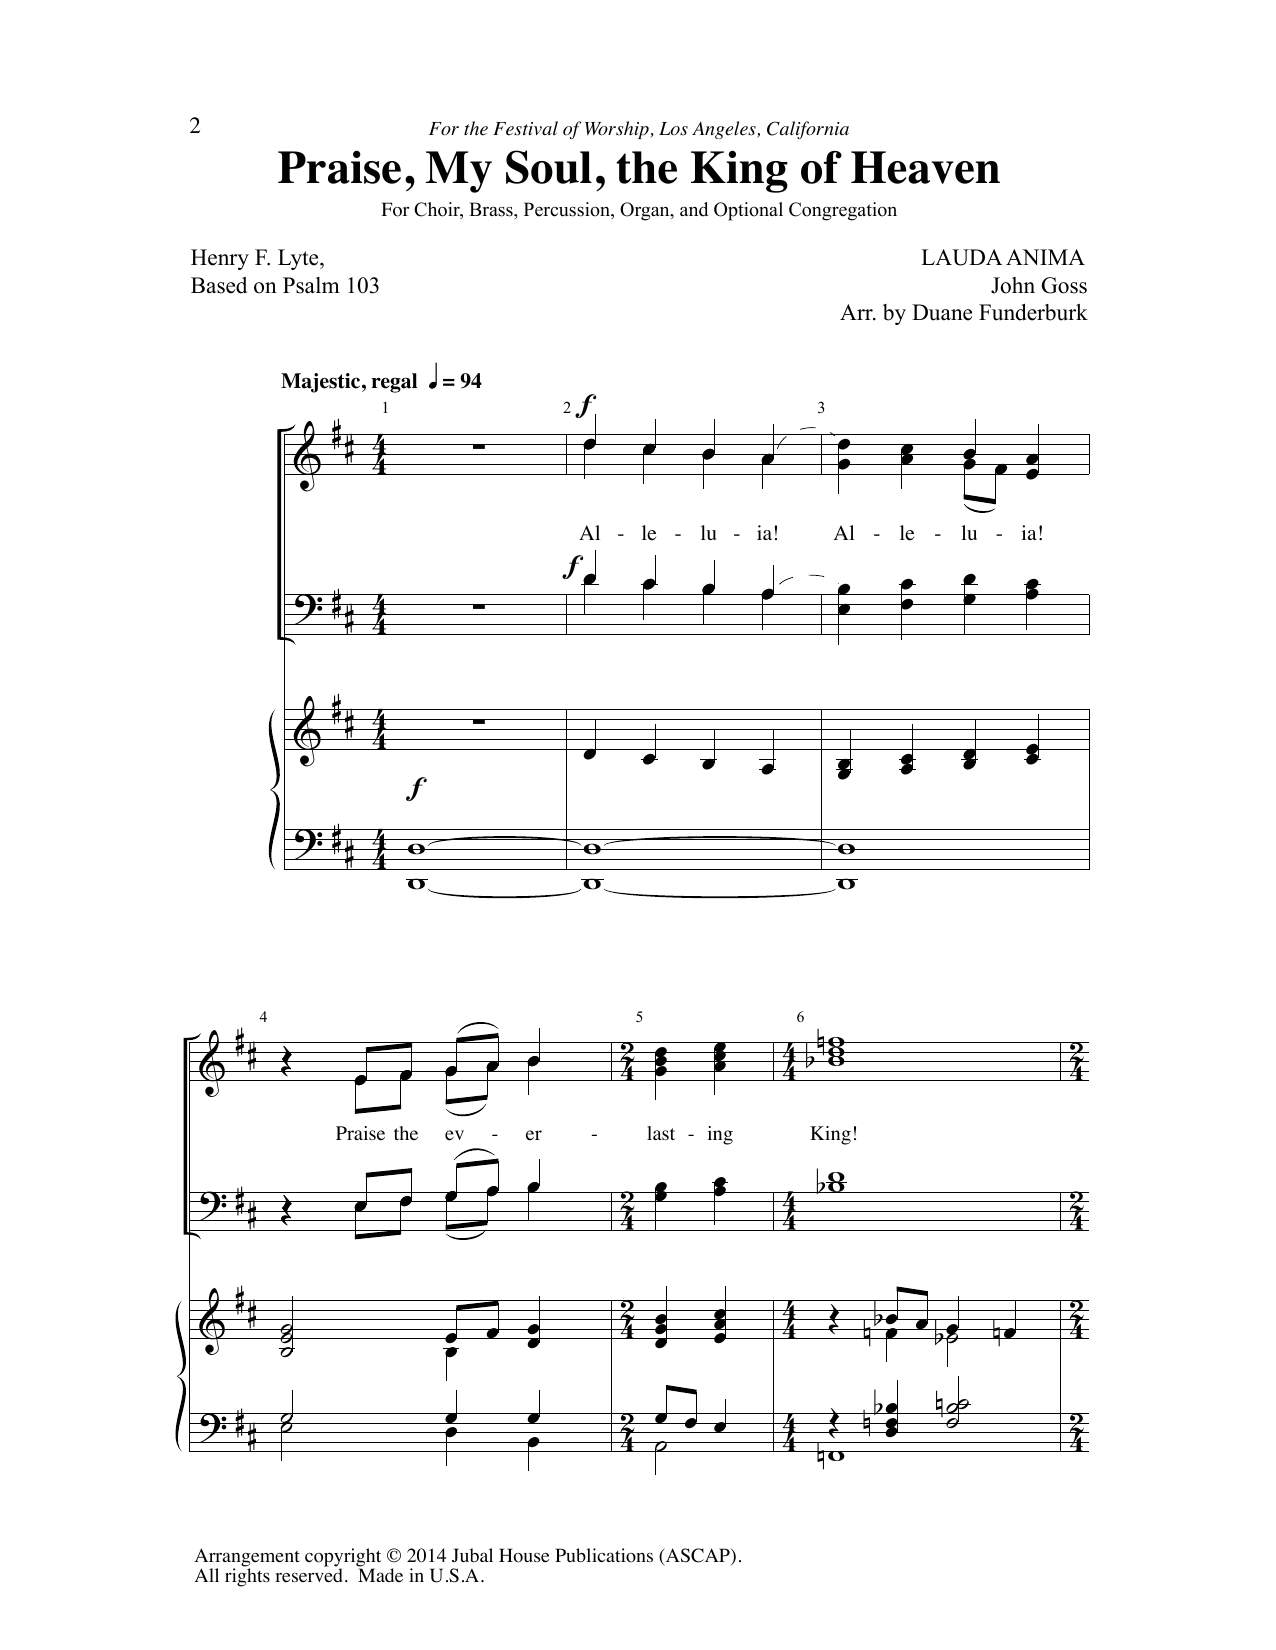 John Goss Praise, My Soul, The King Of Heaven (arr. Duane Funderburk) Sheet Music Notes & Chords for SATB Choir - Download or Print PDF